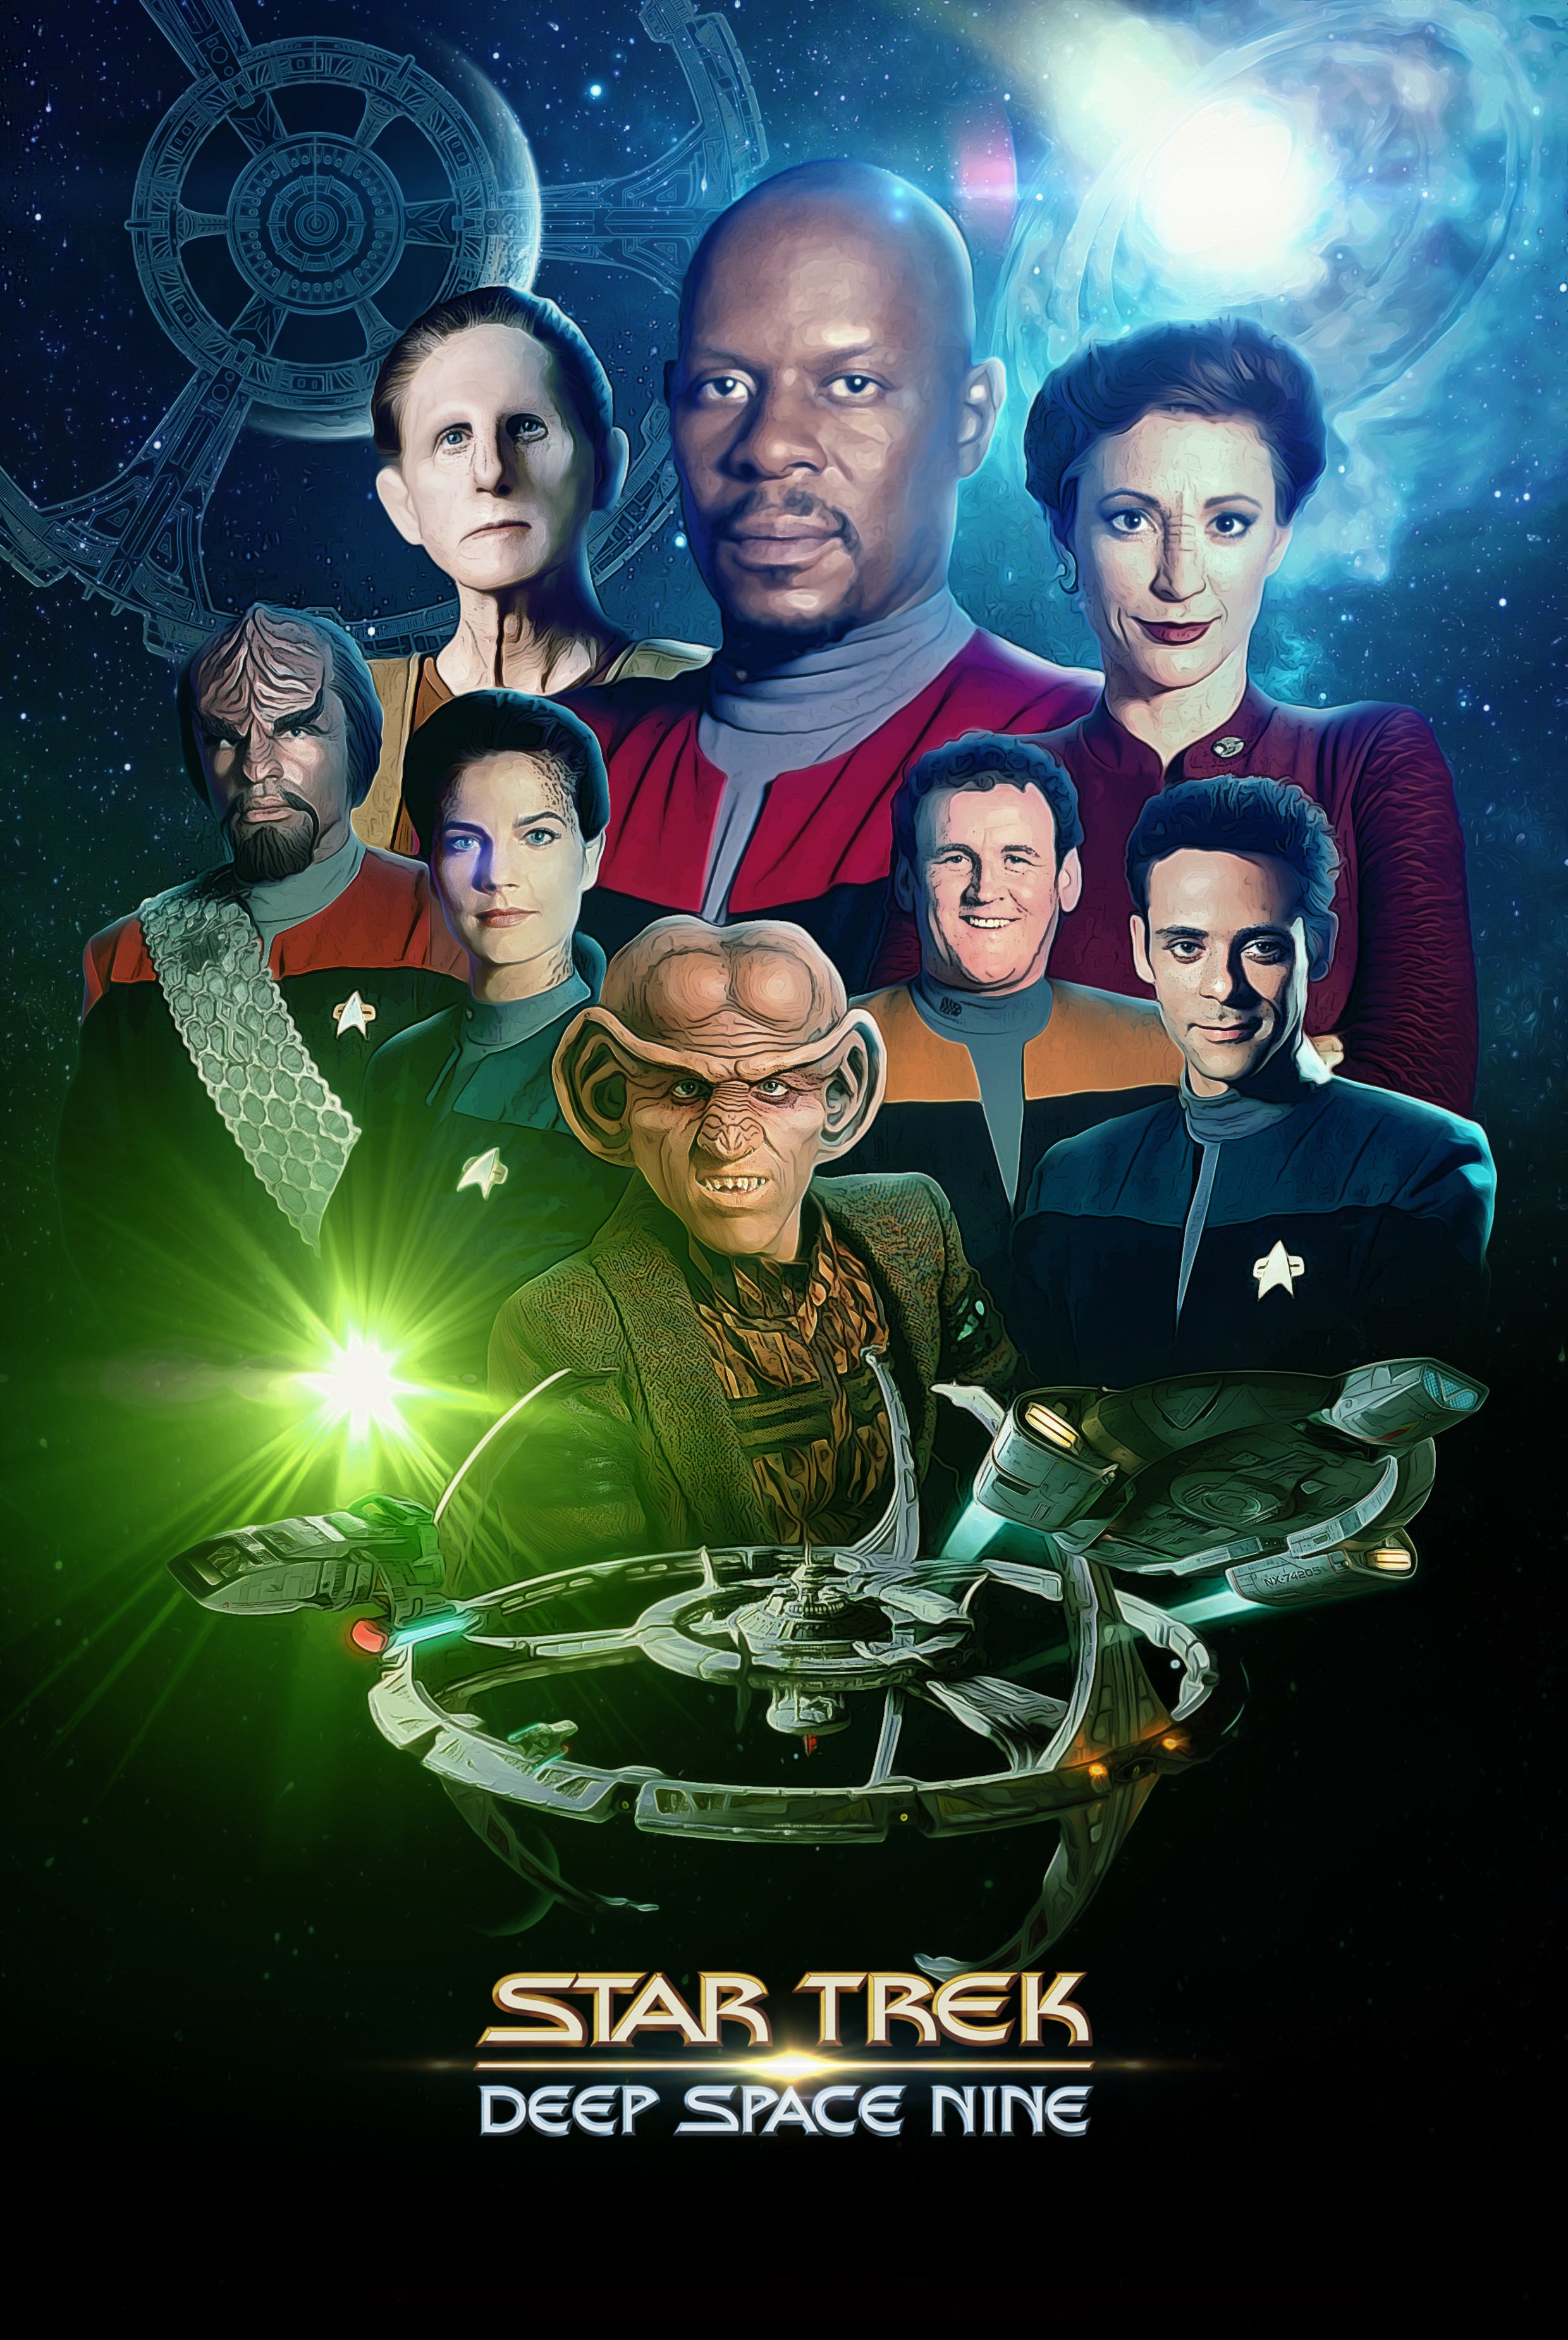 Star Trek: Deep Space Nine (Year: 2369-2375)